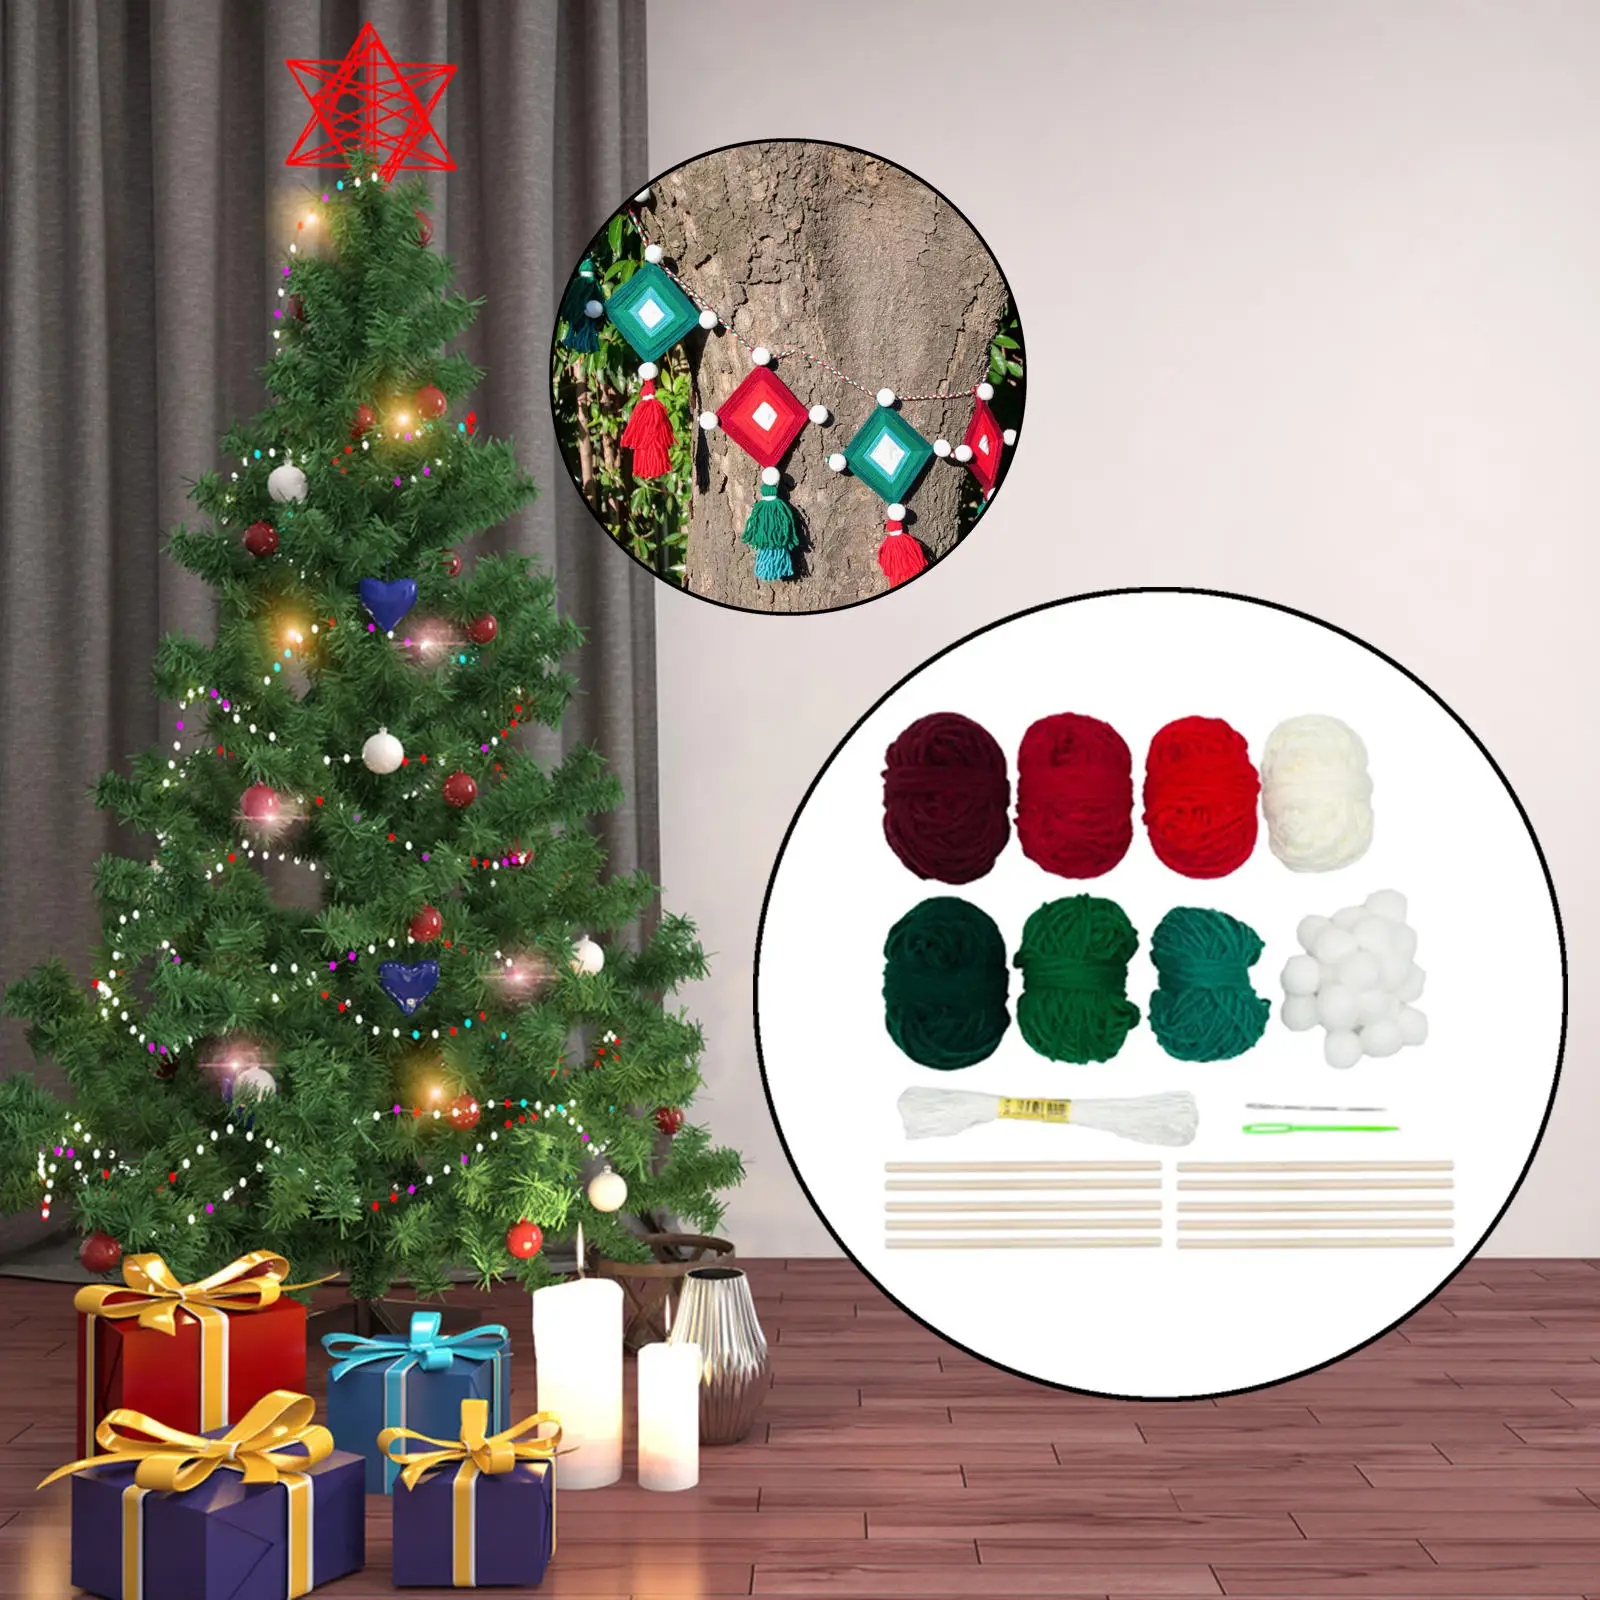 Christmas Macrame Kit Wooden Sticks Home Decor Gift Crafts Wall Hanging Materials Mandala for Beginners Kids Adults